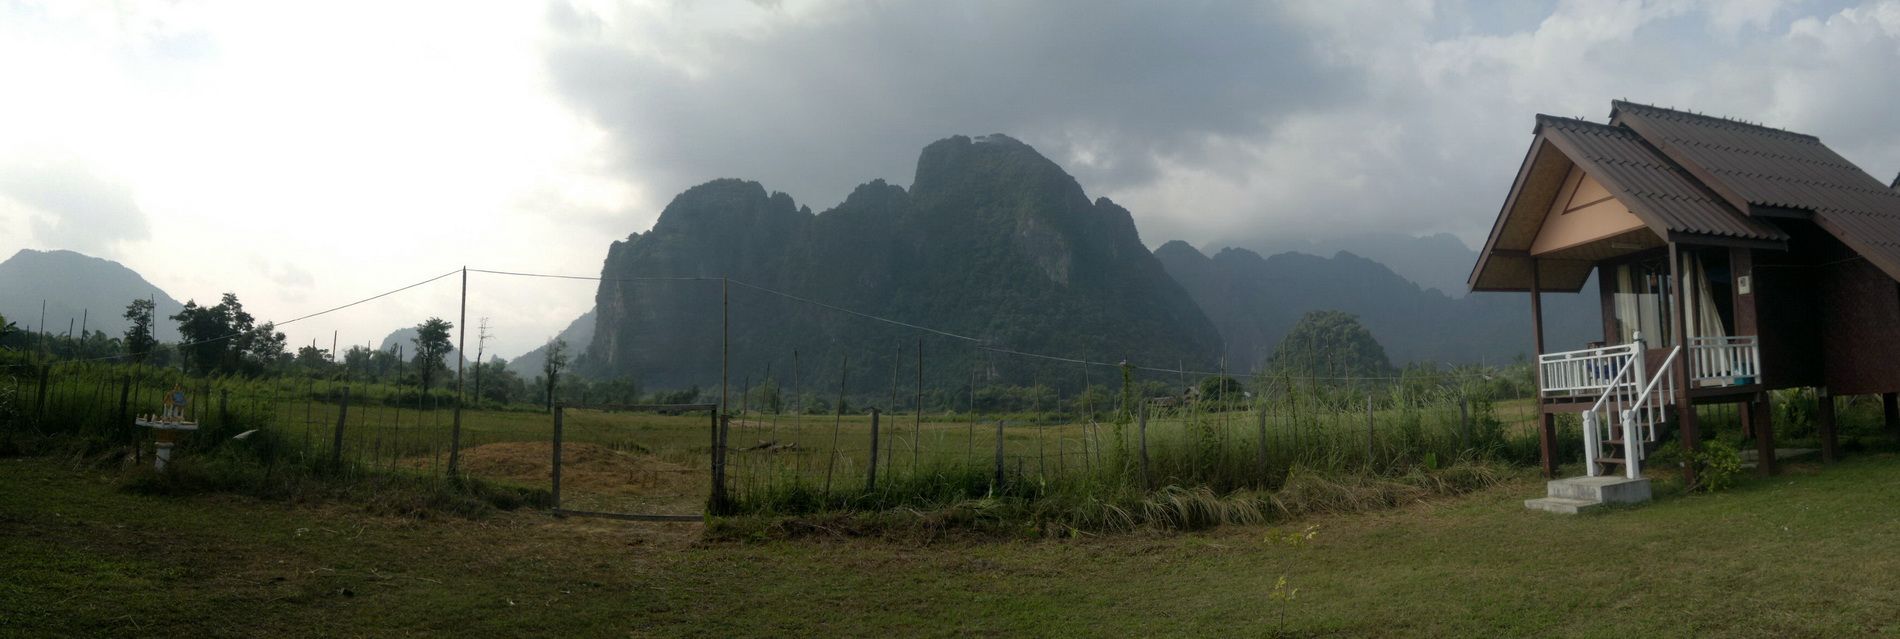 Panorama in Laos Weltreise Bungalow